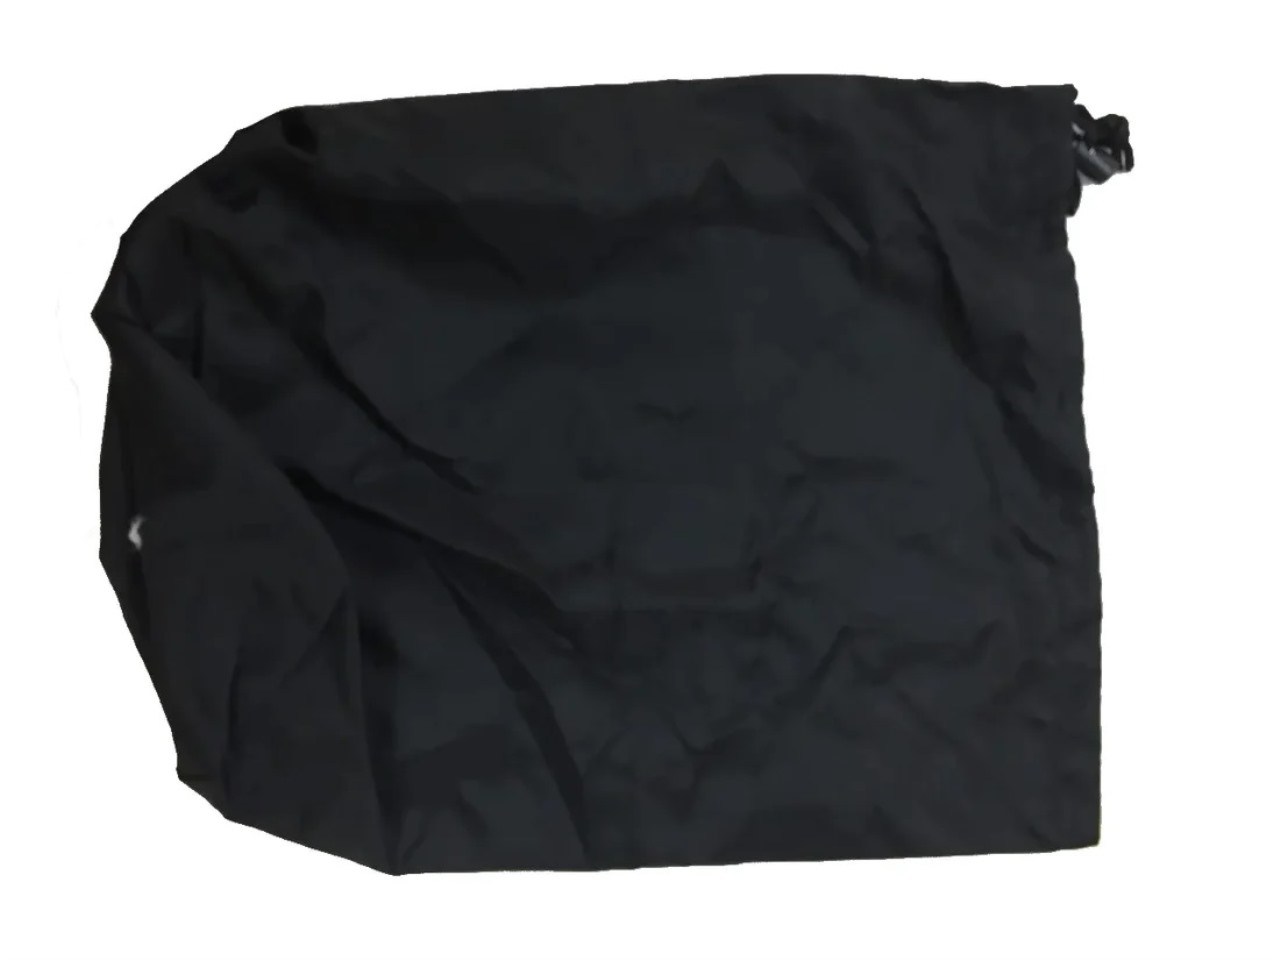 Domex Cram Bag - small black